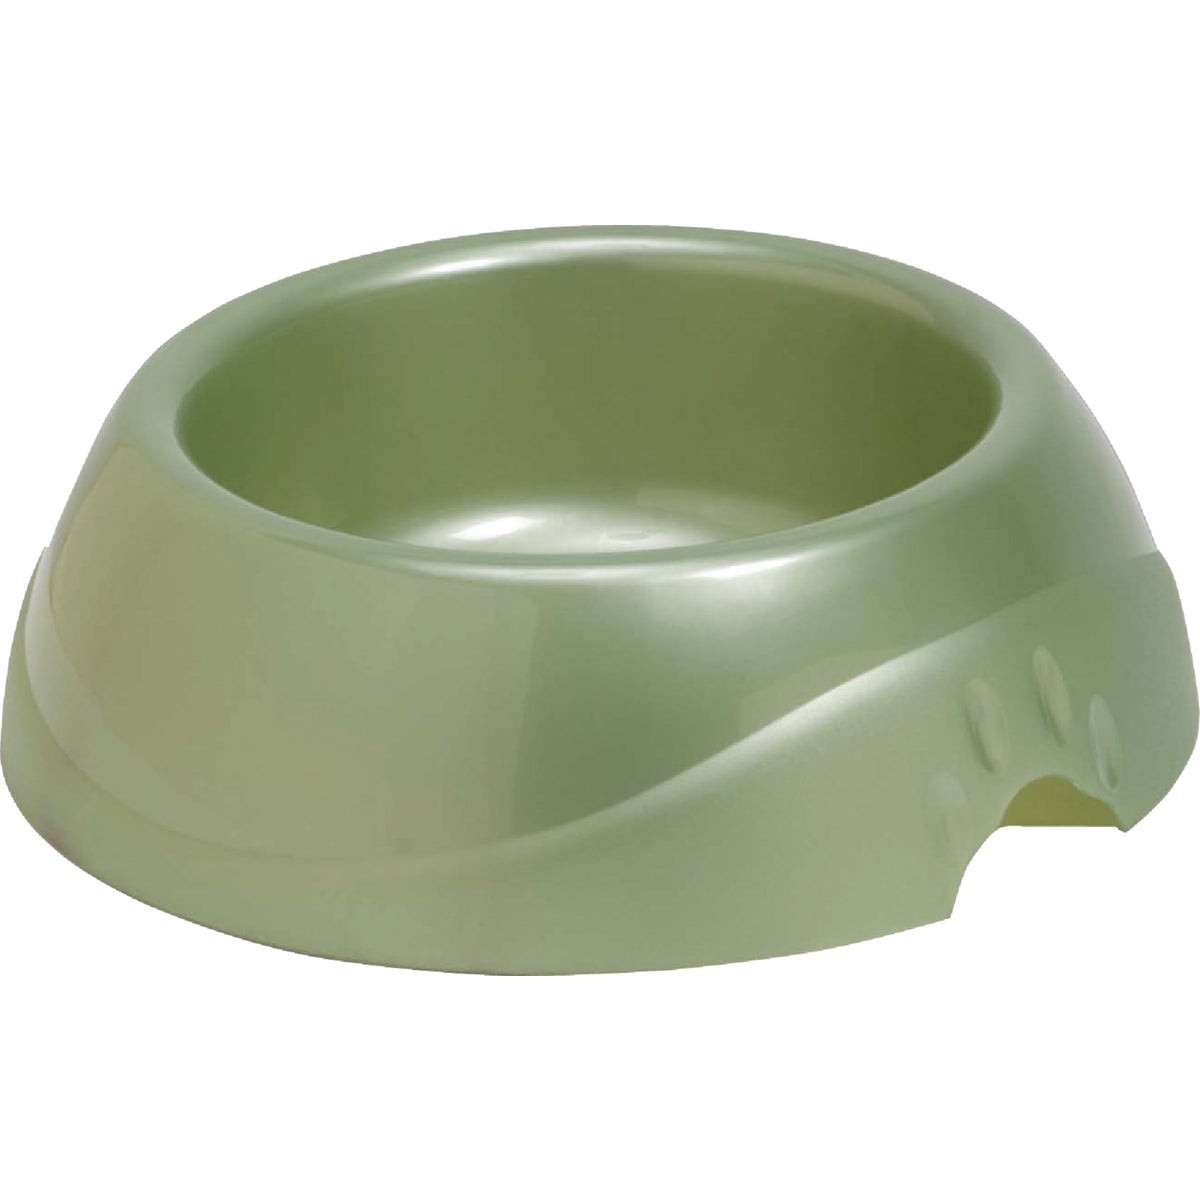 Item 836486, Dishwasher safe pet food bowl featuring a non-tip design.